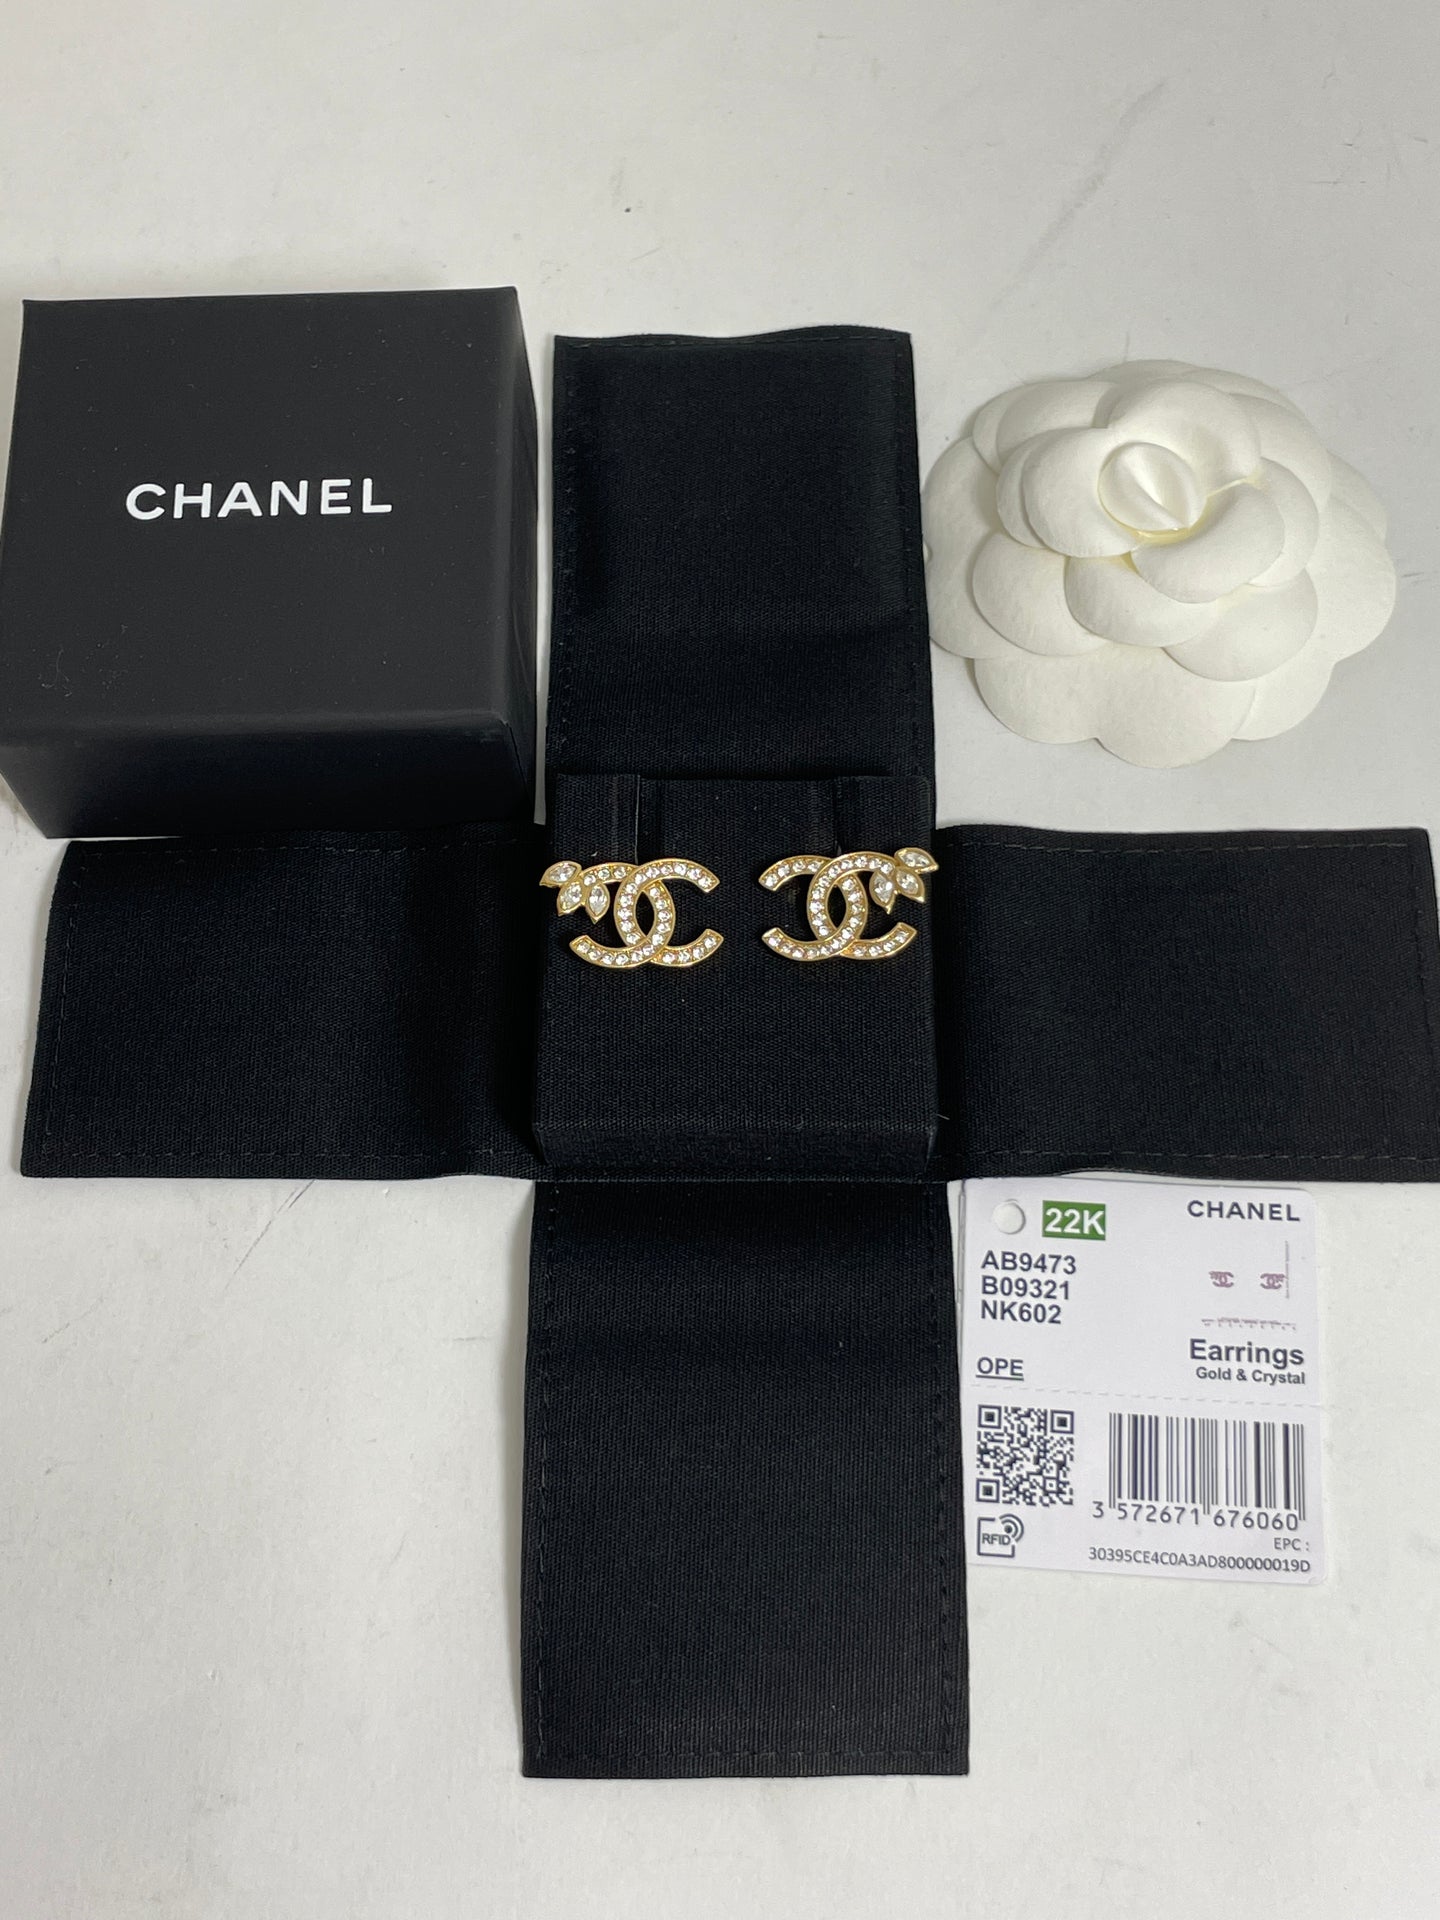 Chanel 22 CC Gold Tone Crystal Earrings Petals